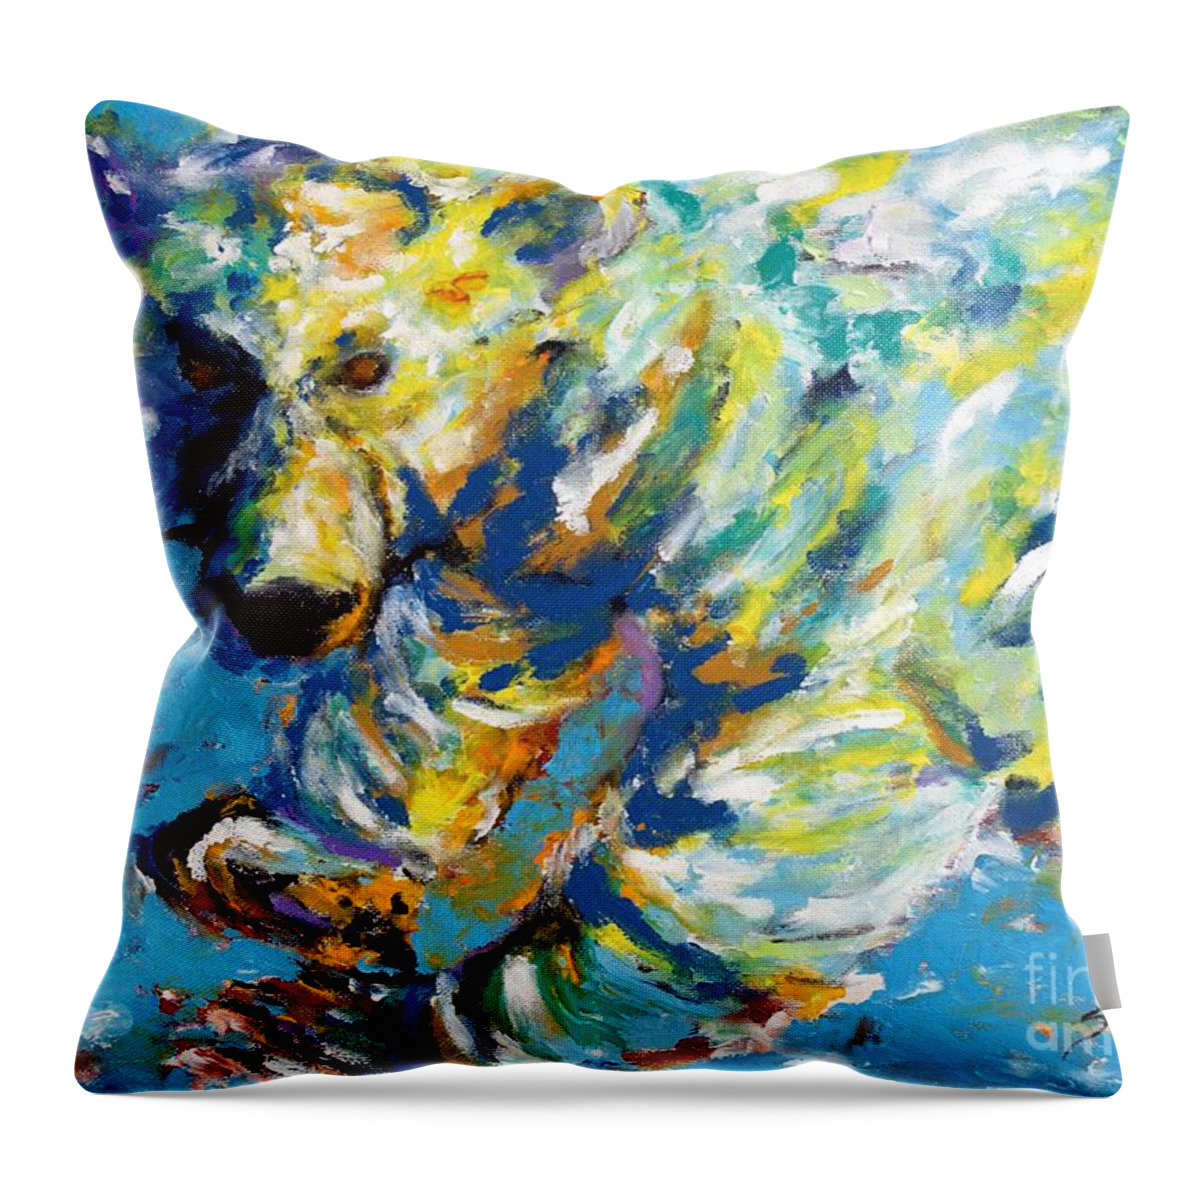 Polar Bear Throw Pillow featuring the painting Polar Bear by Lidija Ivanek - SiLa